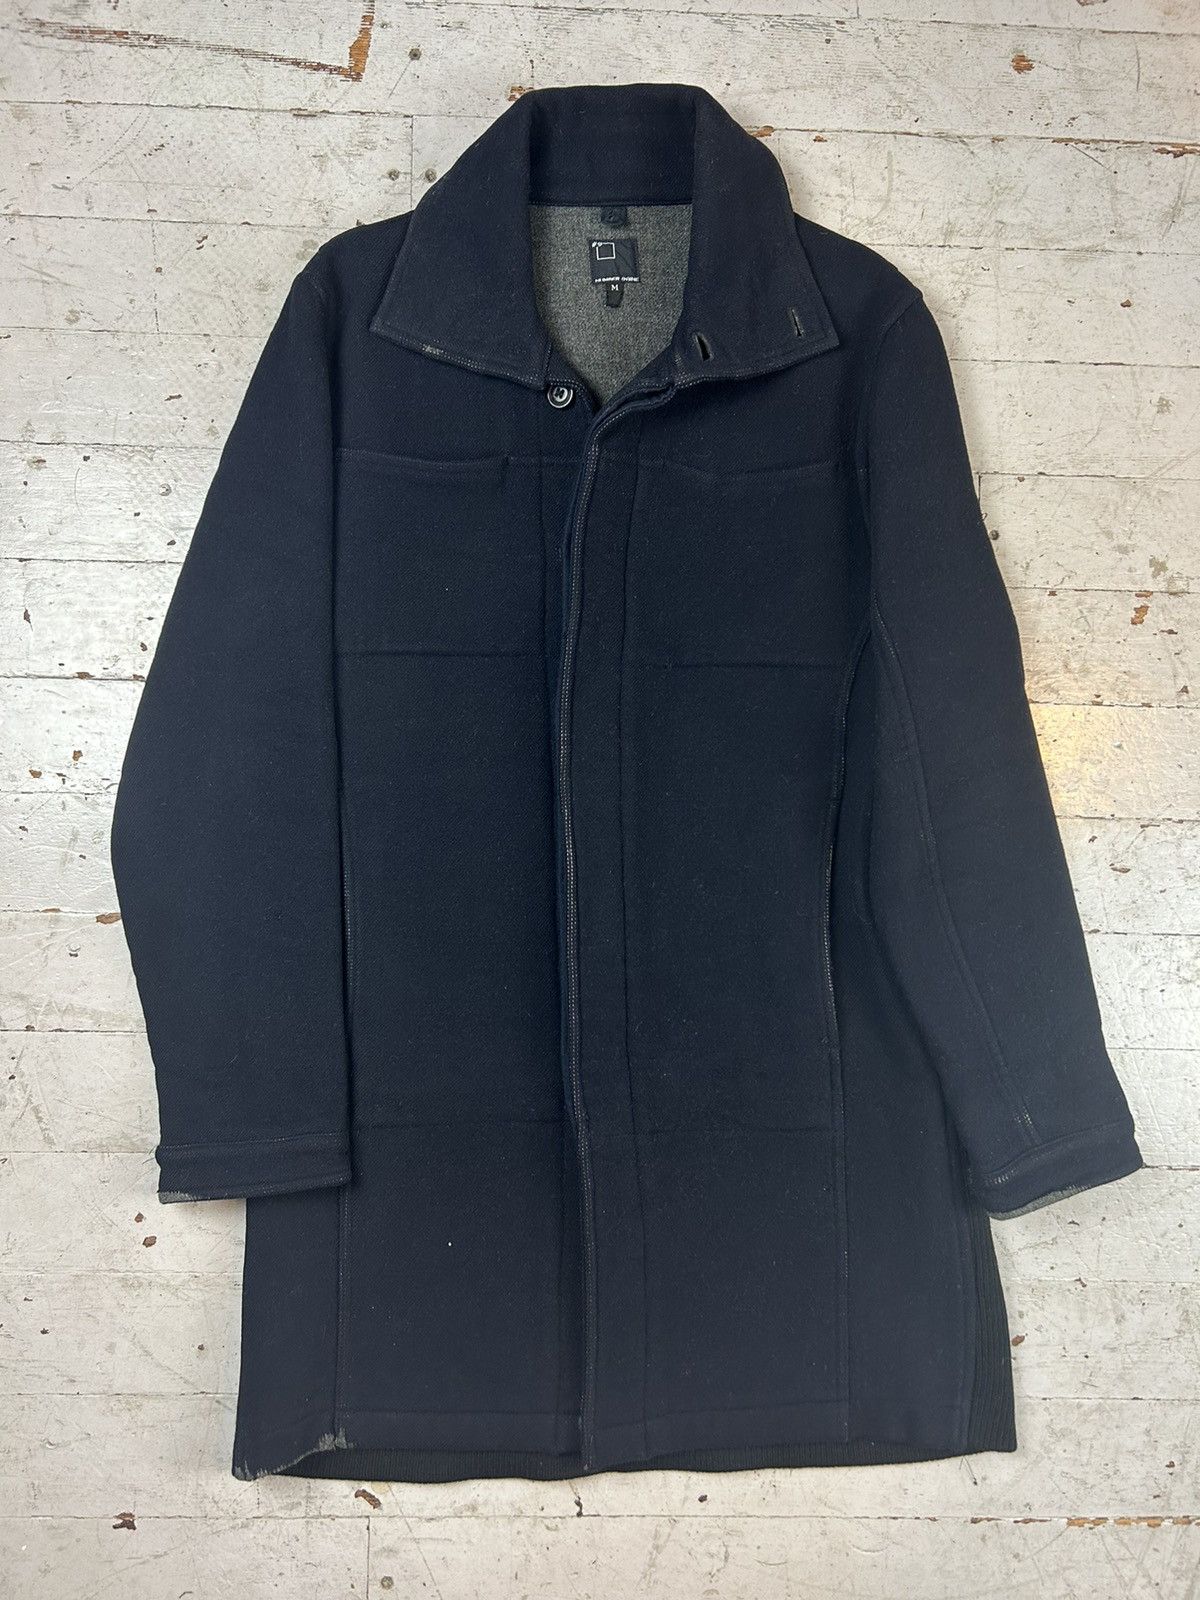 Takahiromiyashita The Soloist quilted half-sleeved jacket - Black